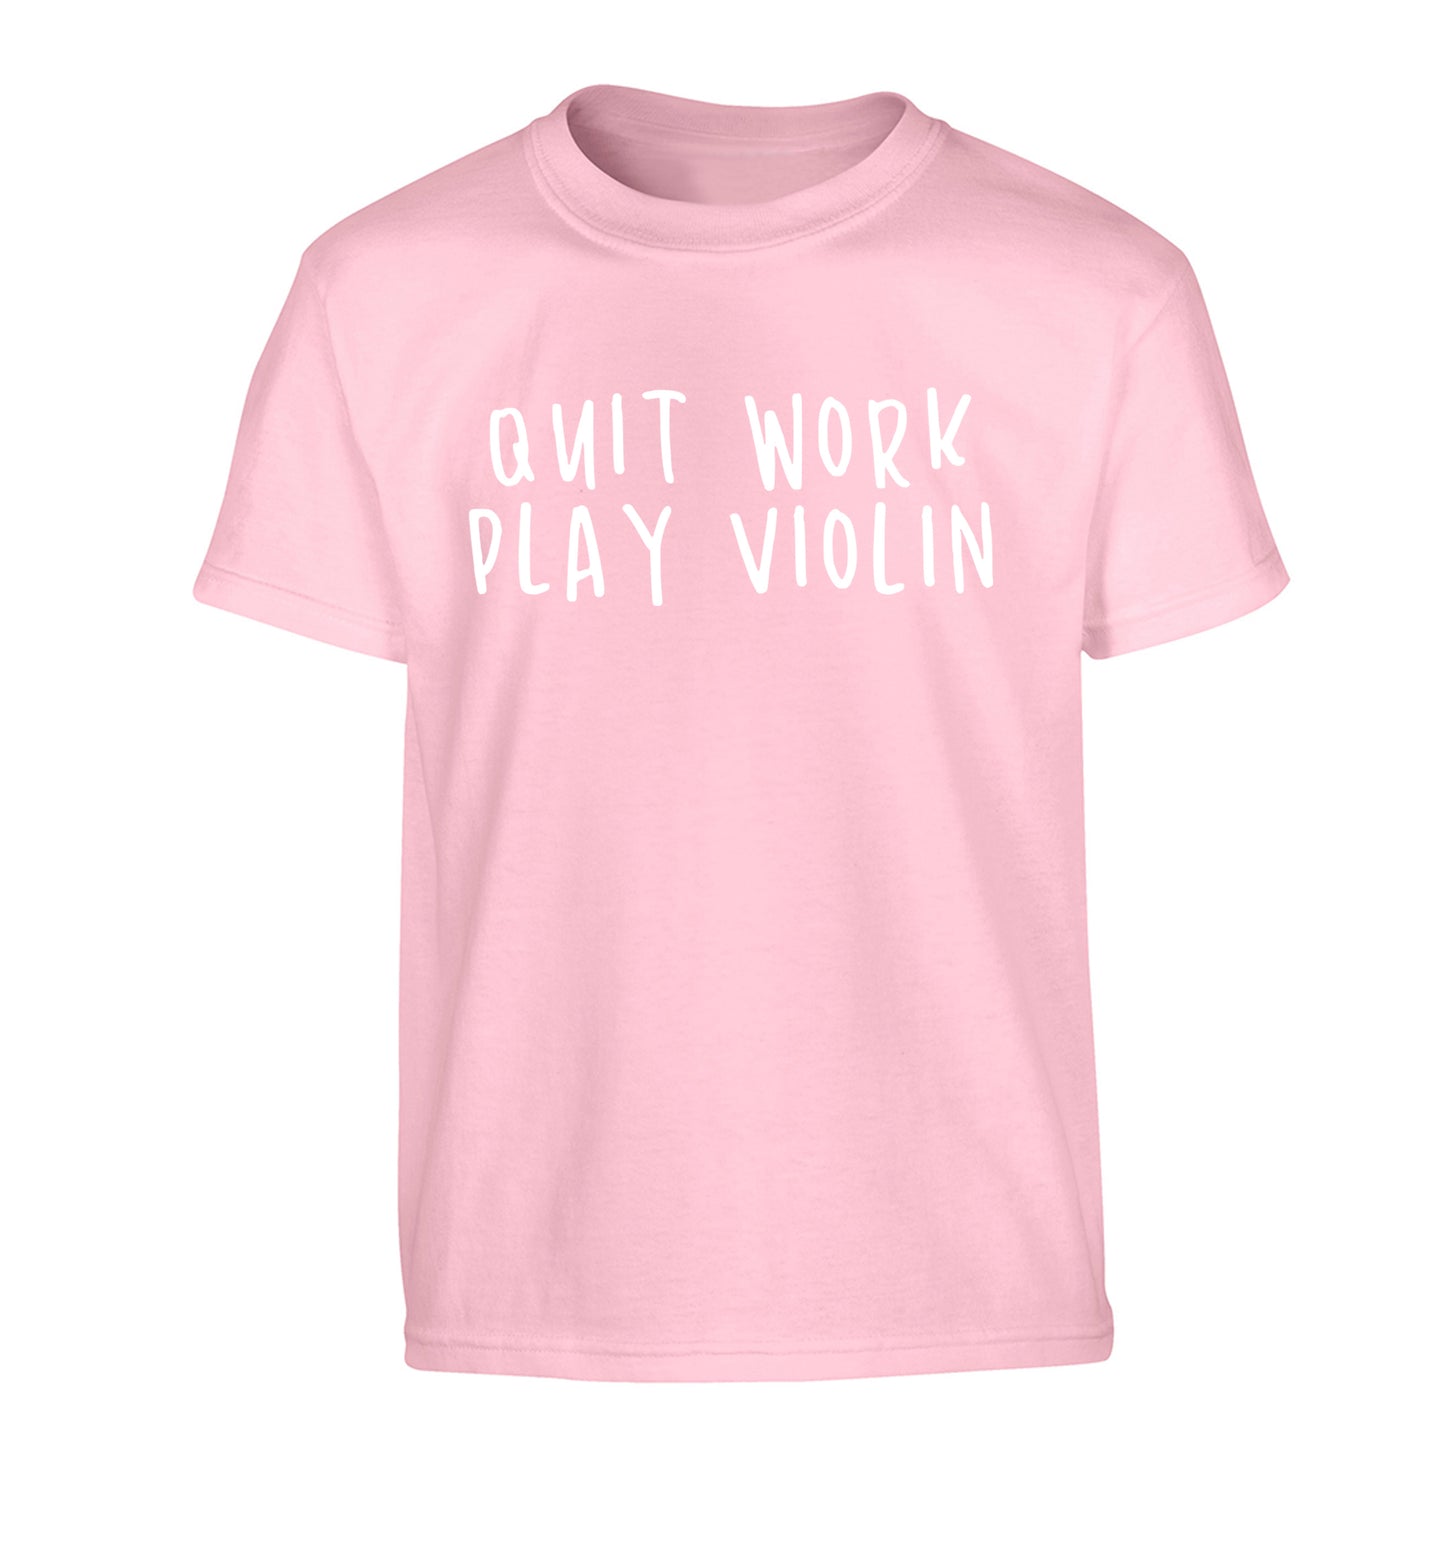 Quit work play violin Children's light pink Tshirt 12-13 Years